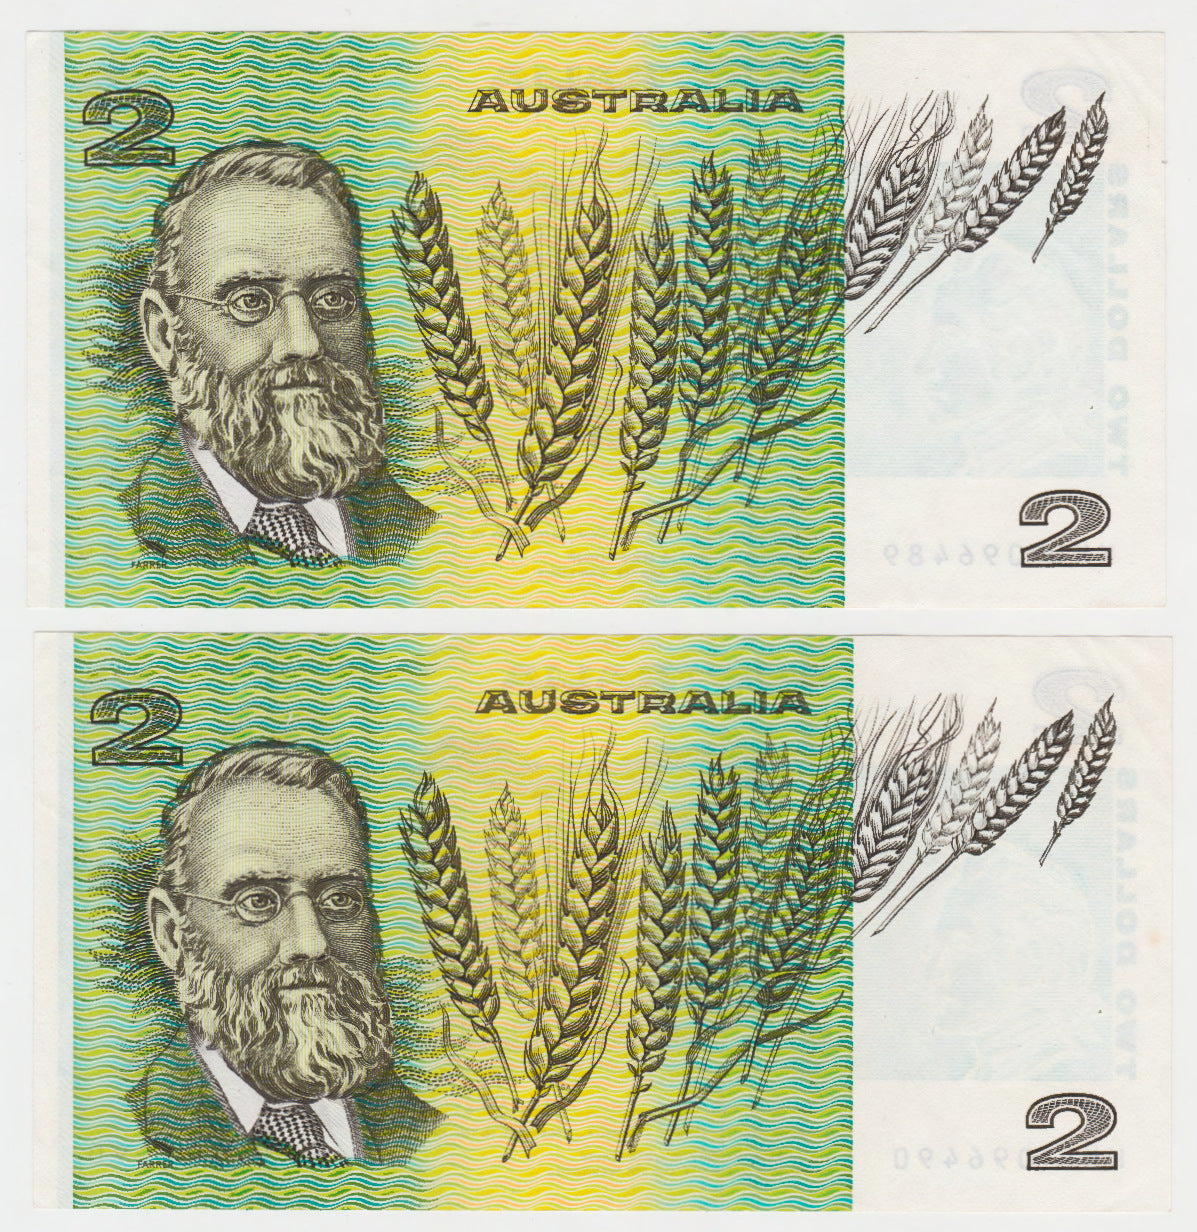 Australian 1983 2 Dollar Johnston Stone Banknotes Consecutive Pair s/n's KKU 096489-90 - Circulated